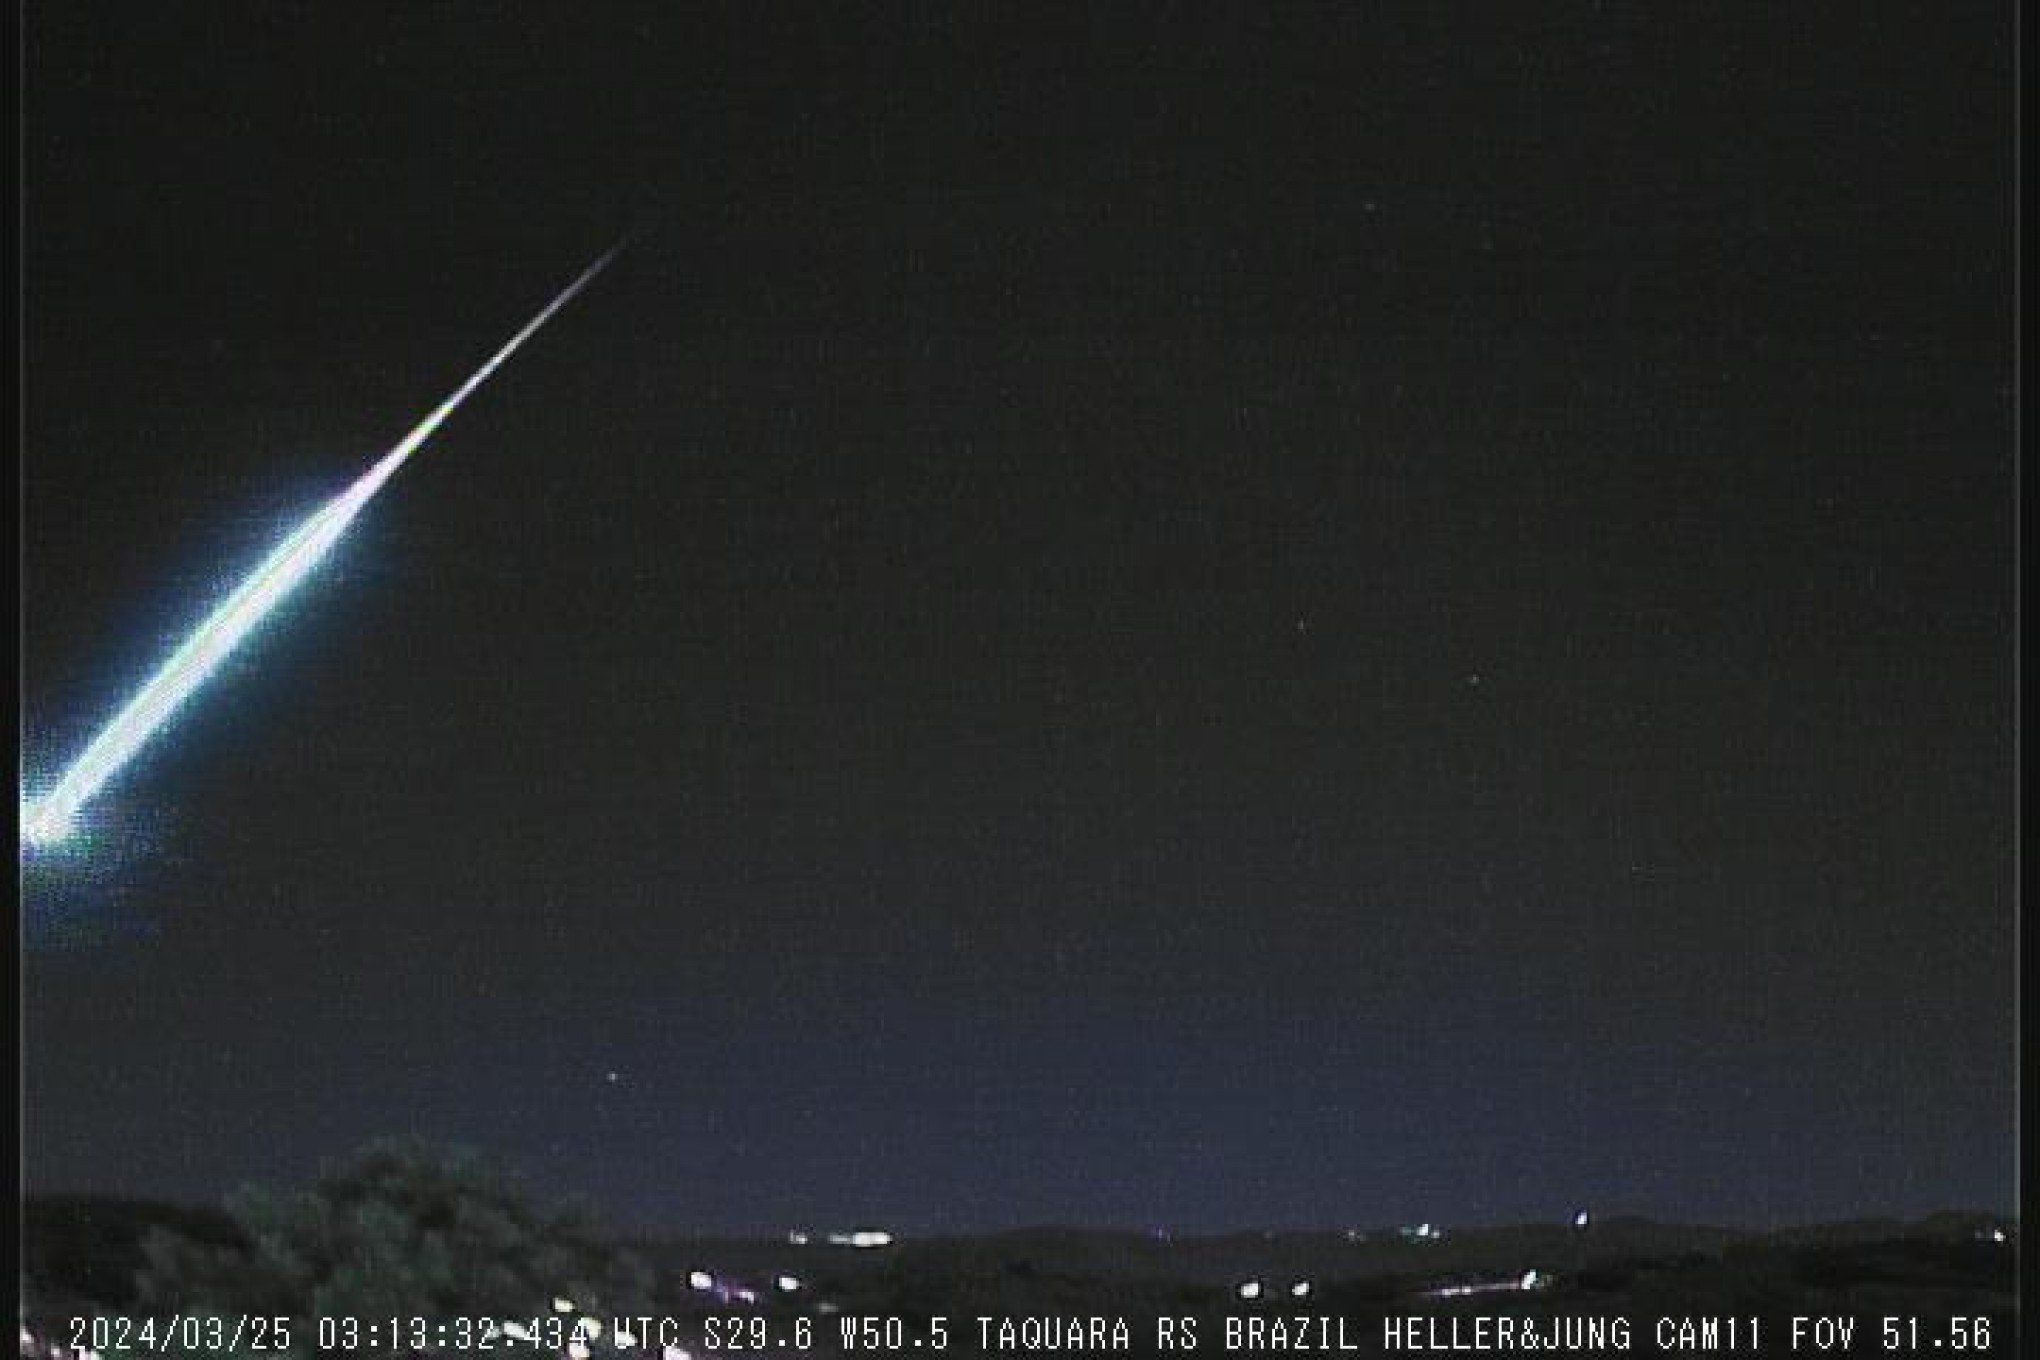 "Fomos surpreendidos": Meteoro de alta magnitude é visto no céu do RS durante eclipse lunar; veja vídeo